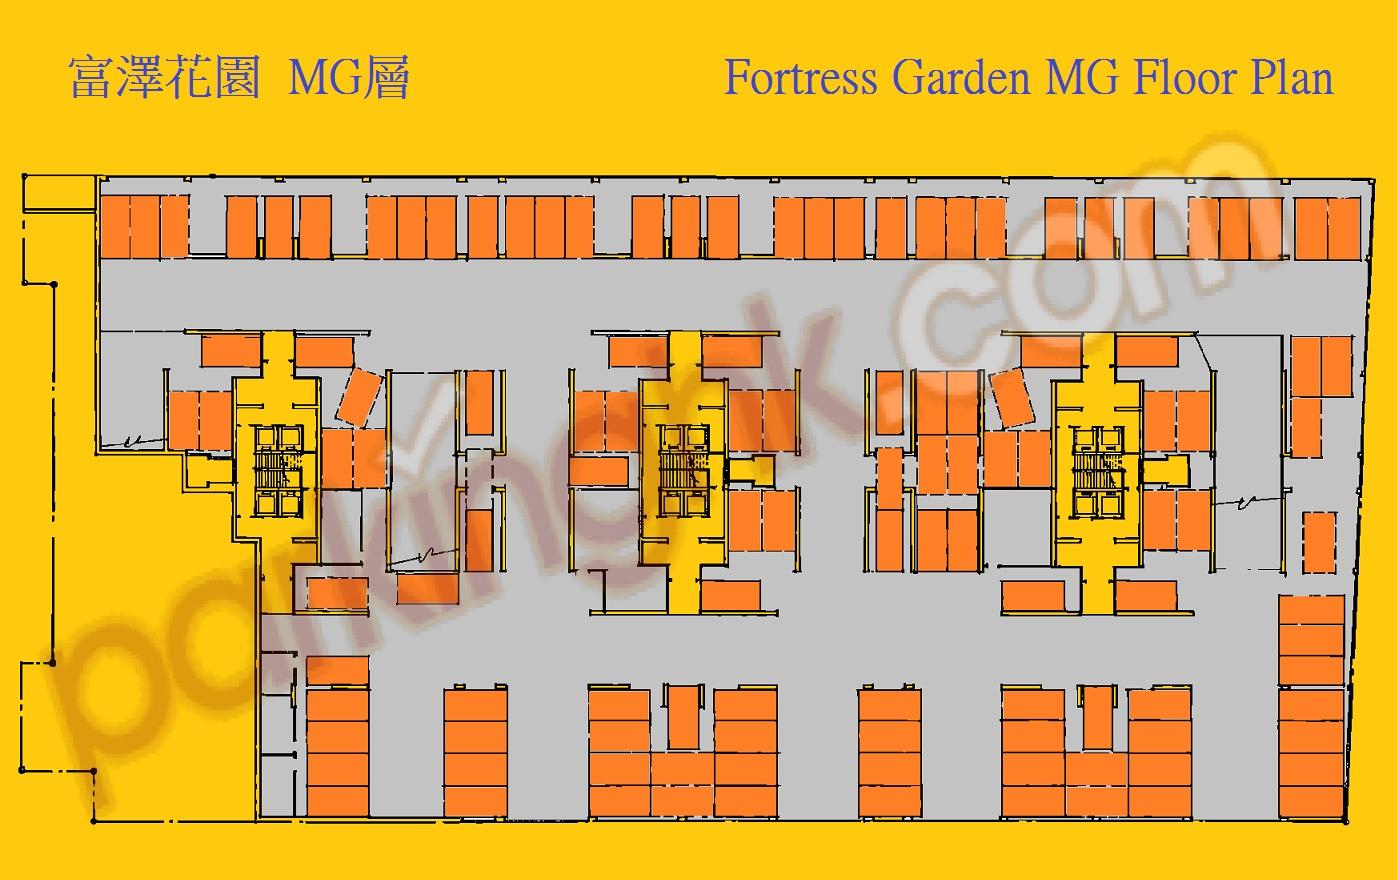  Fortress Hill Carpark  Fortress Hill Road  Fortress Garden  Floor plan 香港車位.com ParkingHK.com